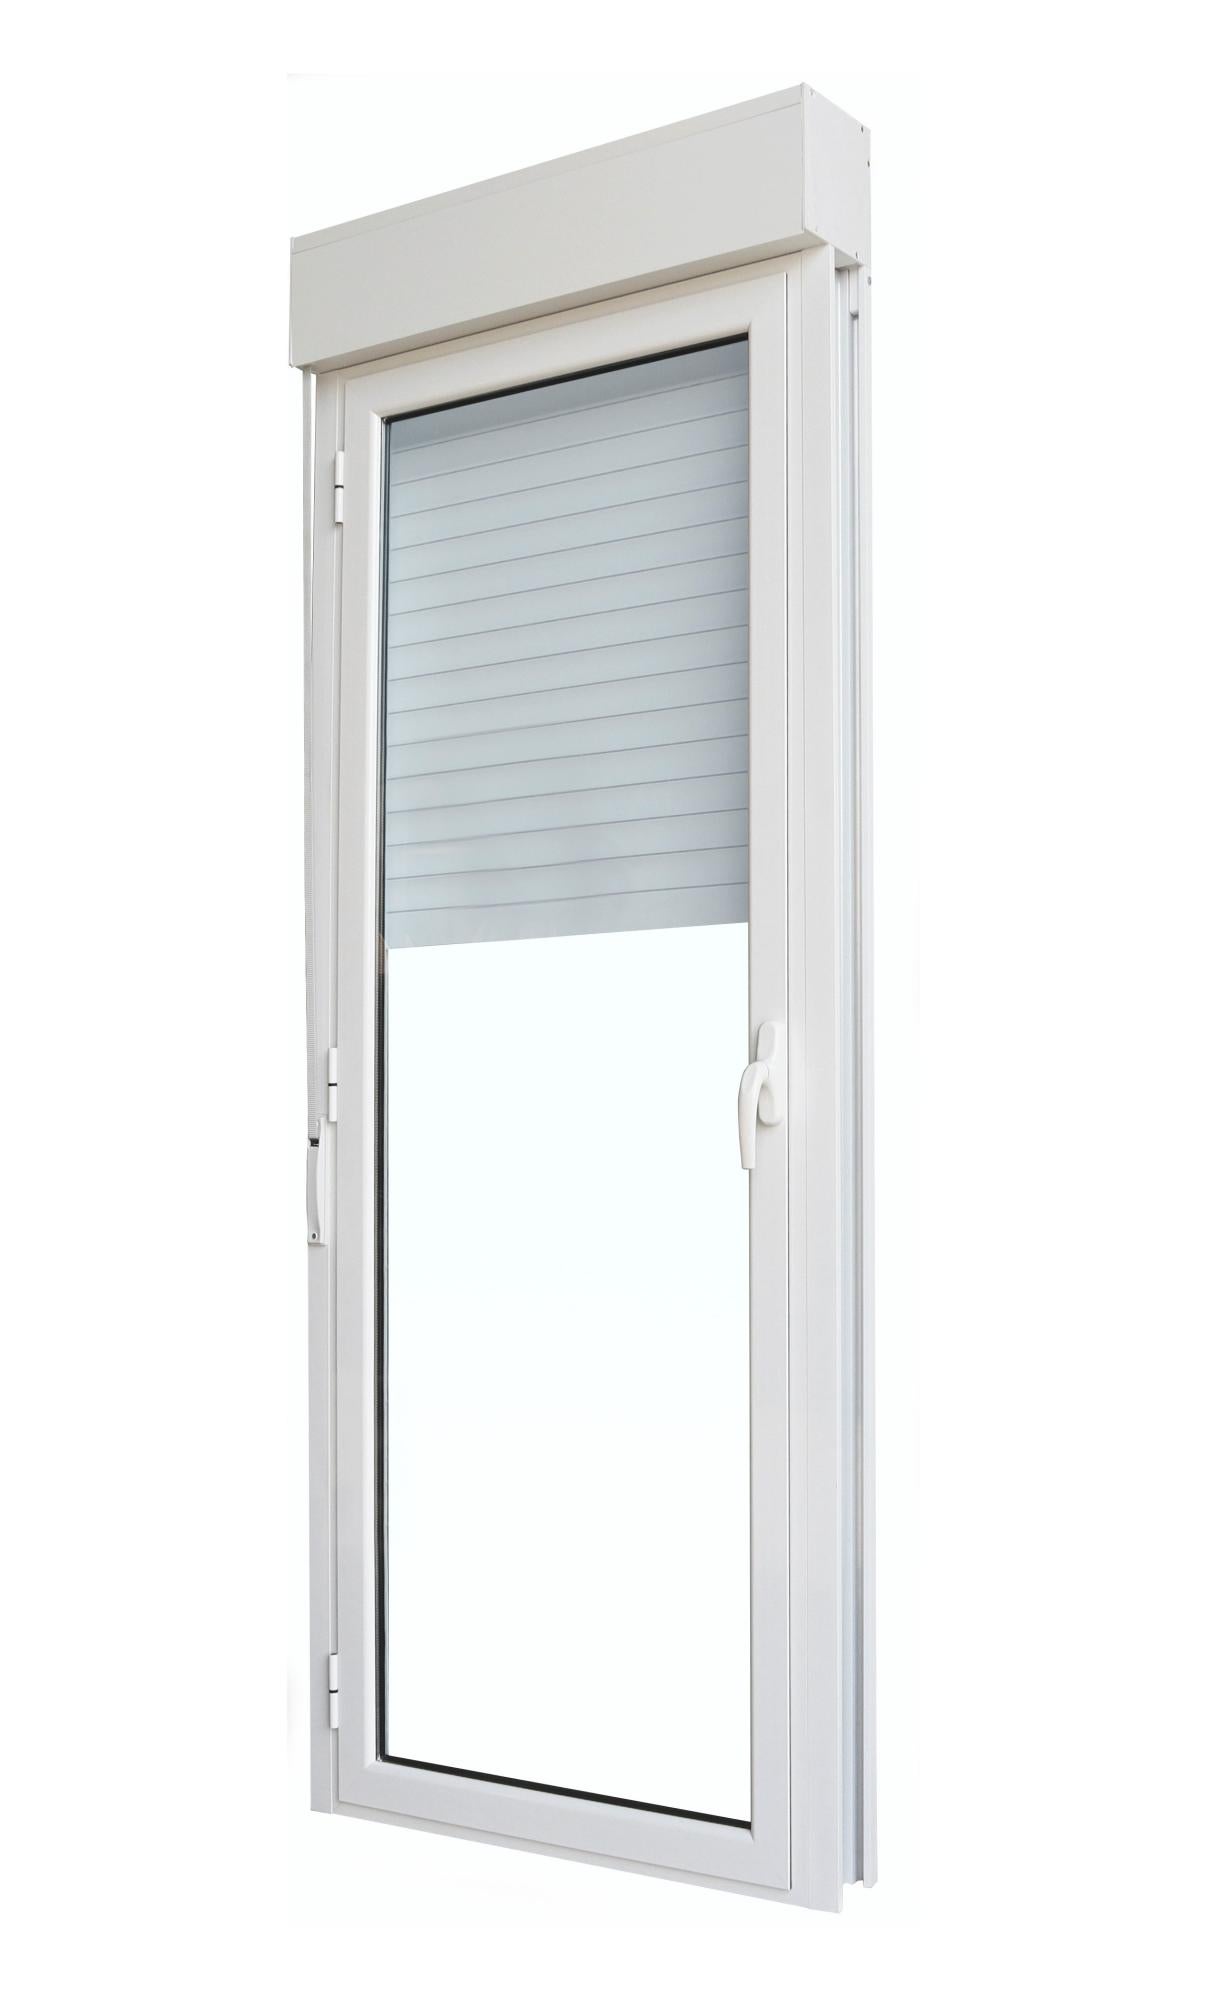 Balconera aluminio artens practicable con persiana de 90x229cm